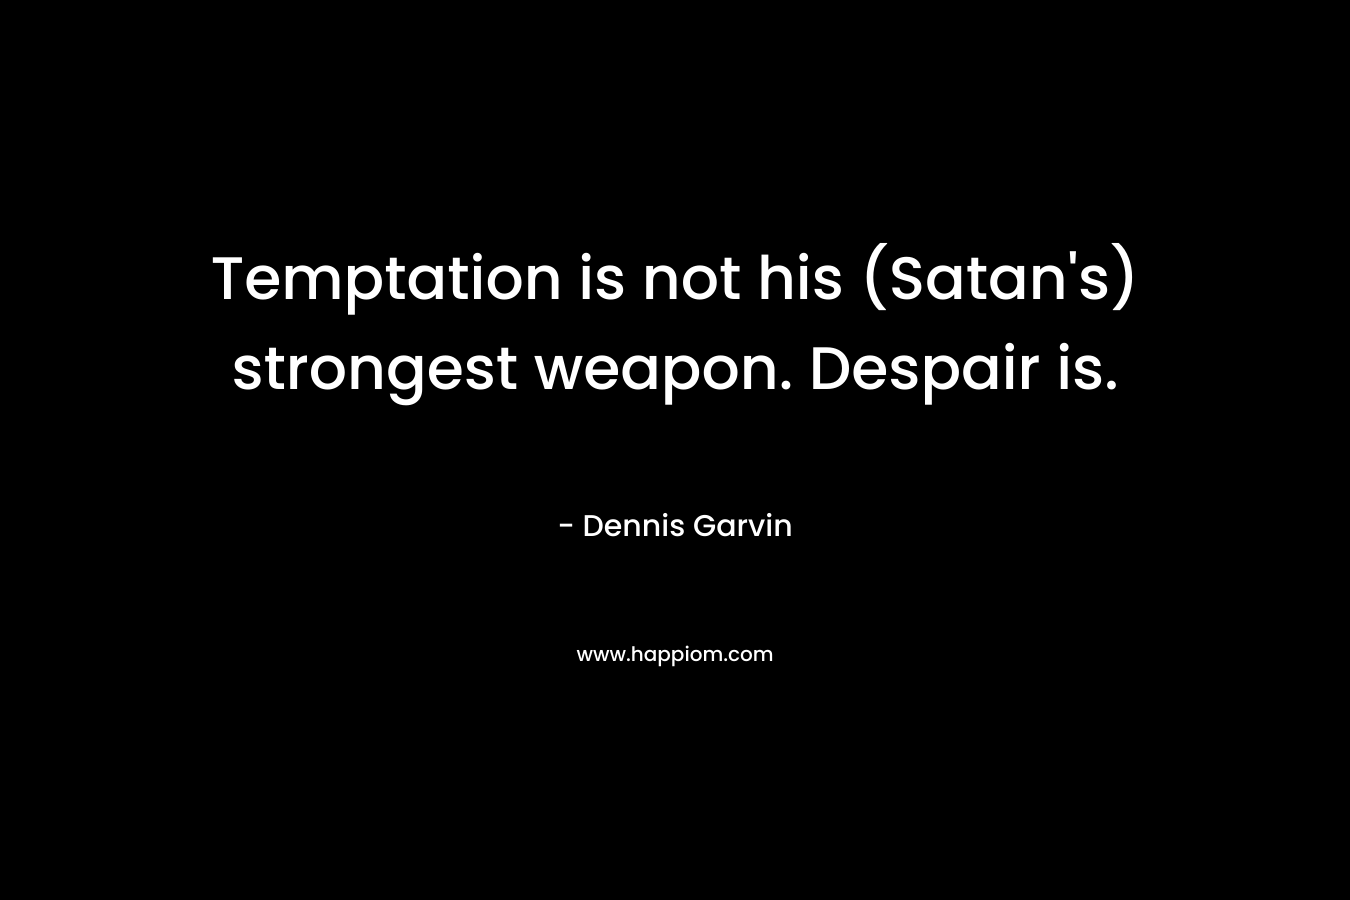 Temptation is not his (Satan’s) strongest weapon. Despair is. – Dennis Garvin